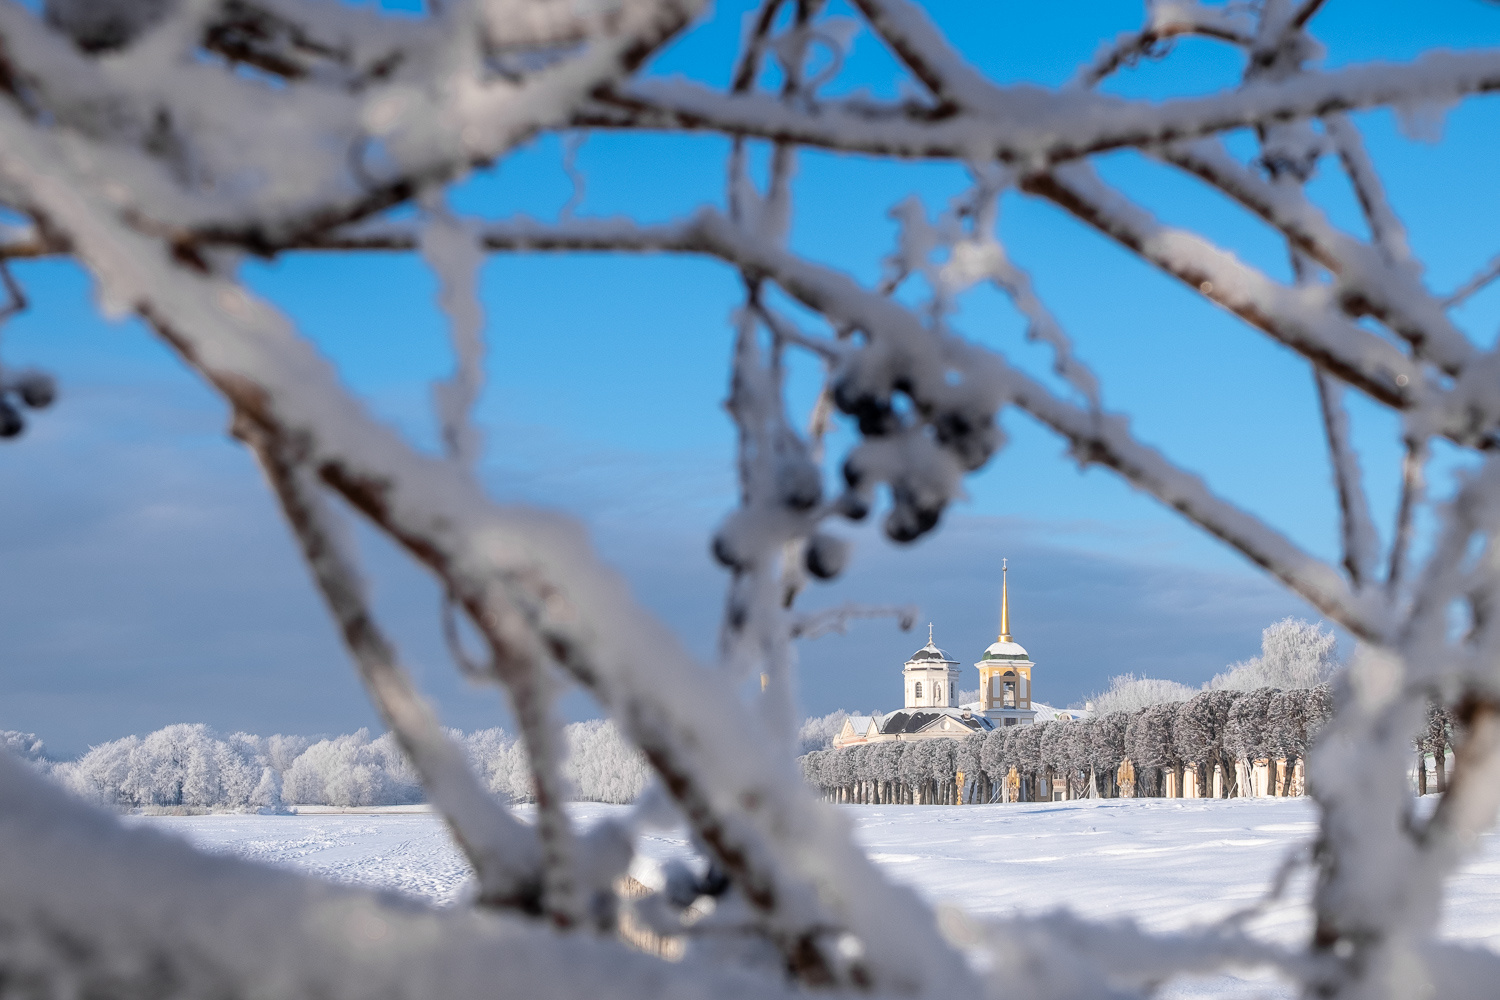 Застывшее дыхание города город Москва утро солнце парк дерево снег зима мороз иней лед небо облака